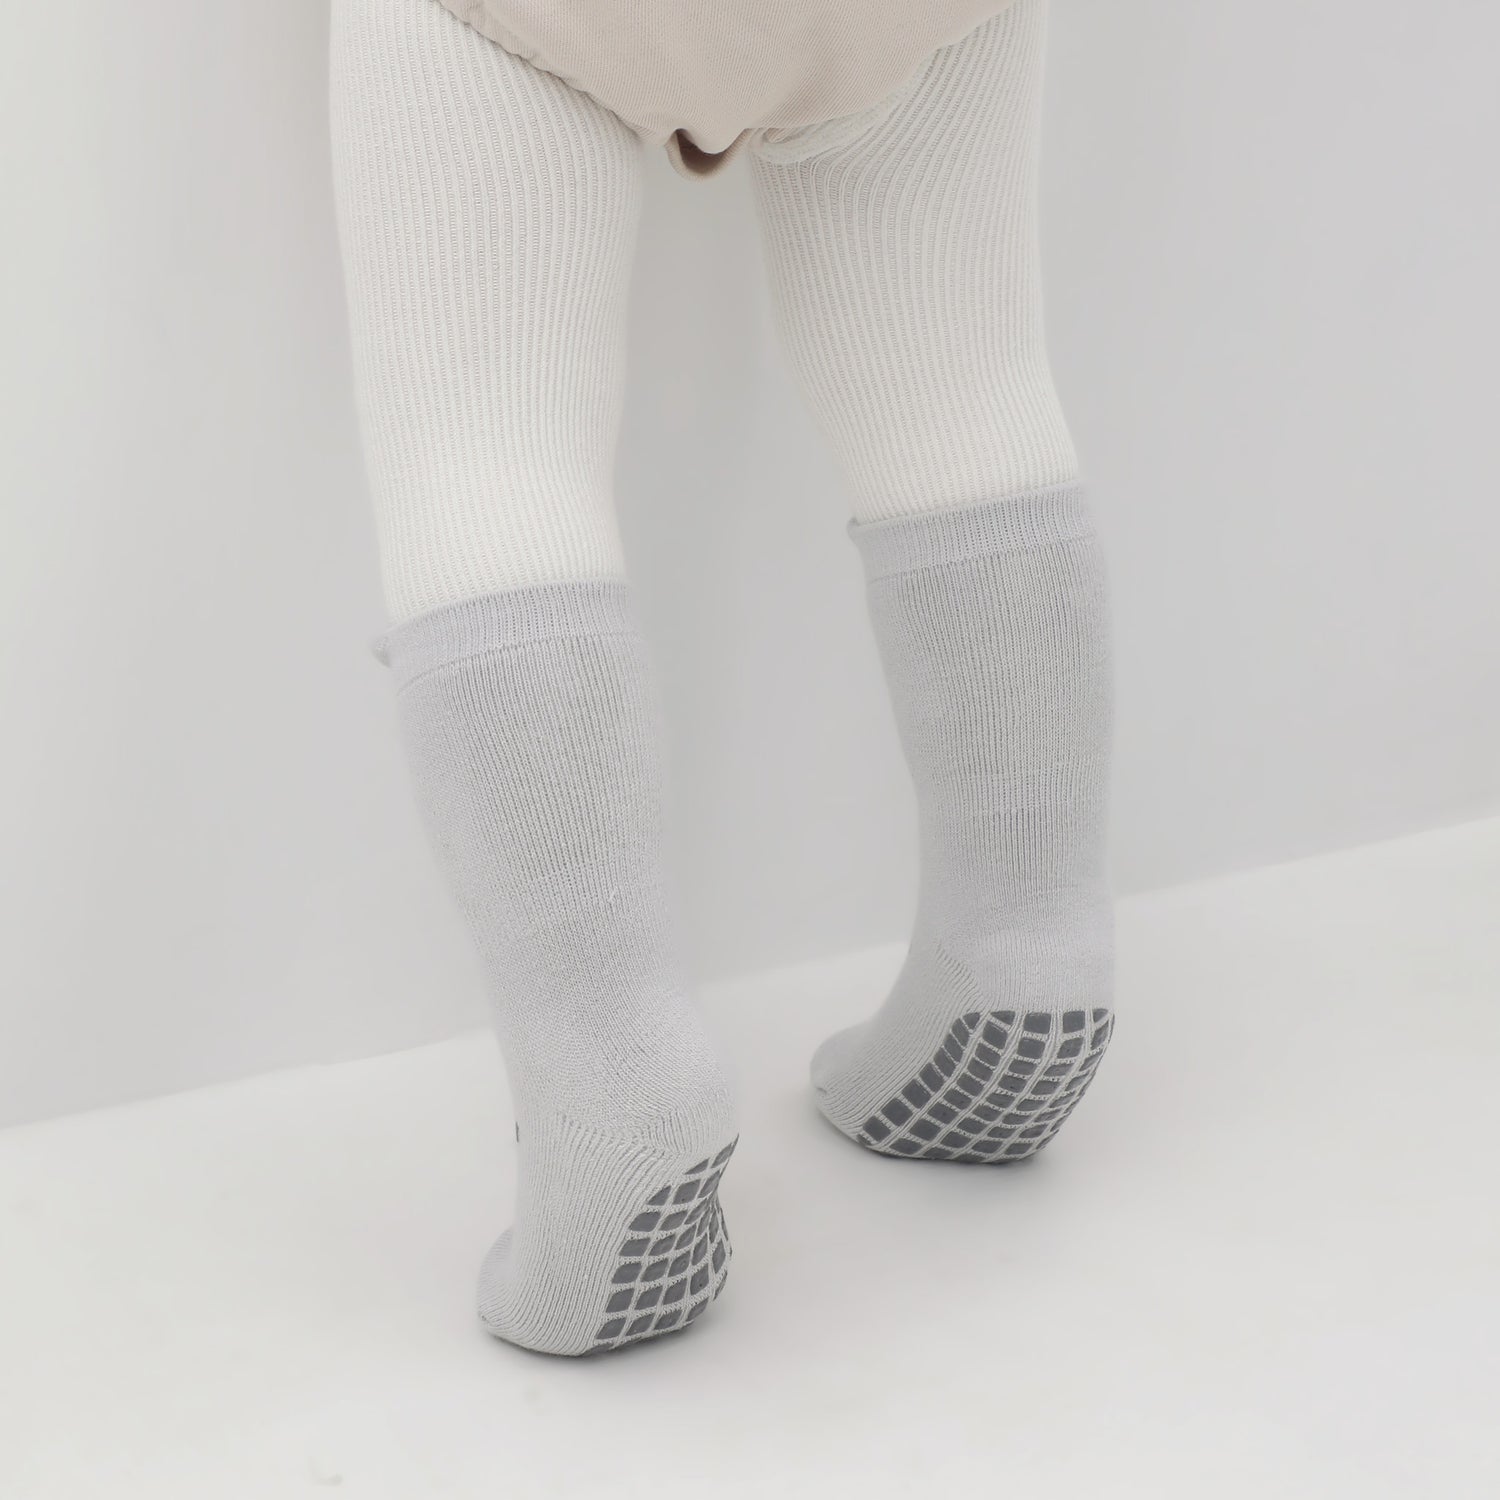 Grip socks, low cut, white